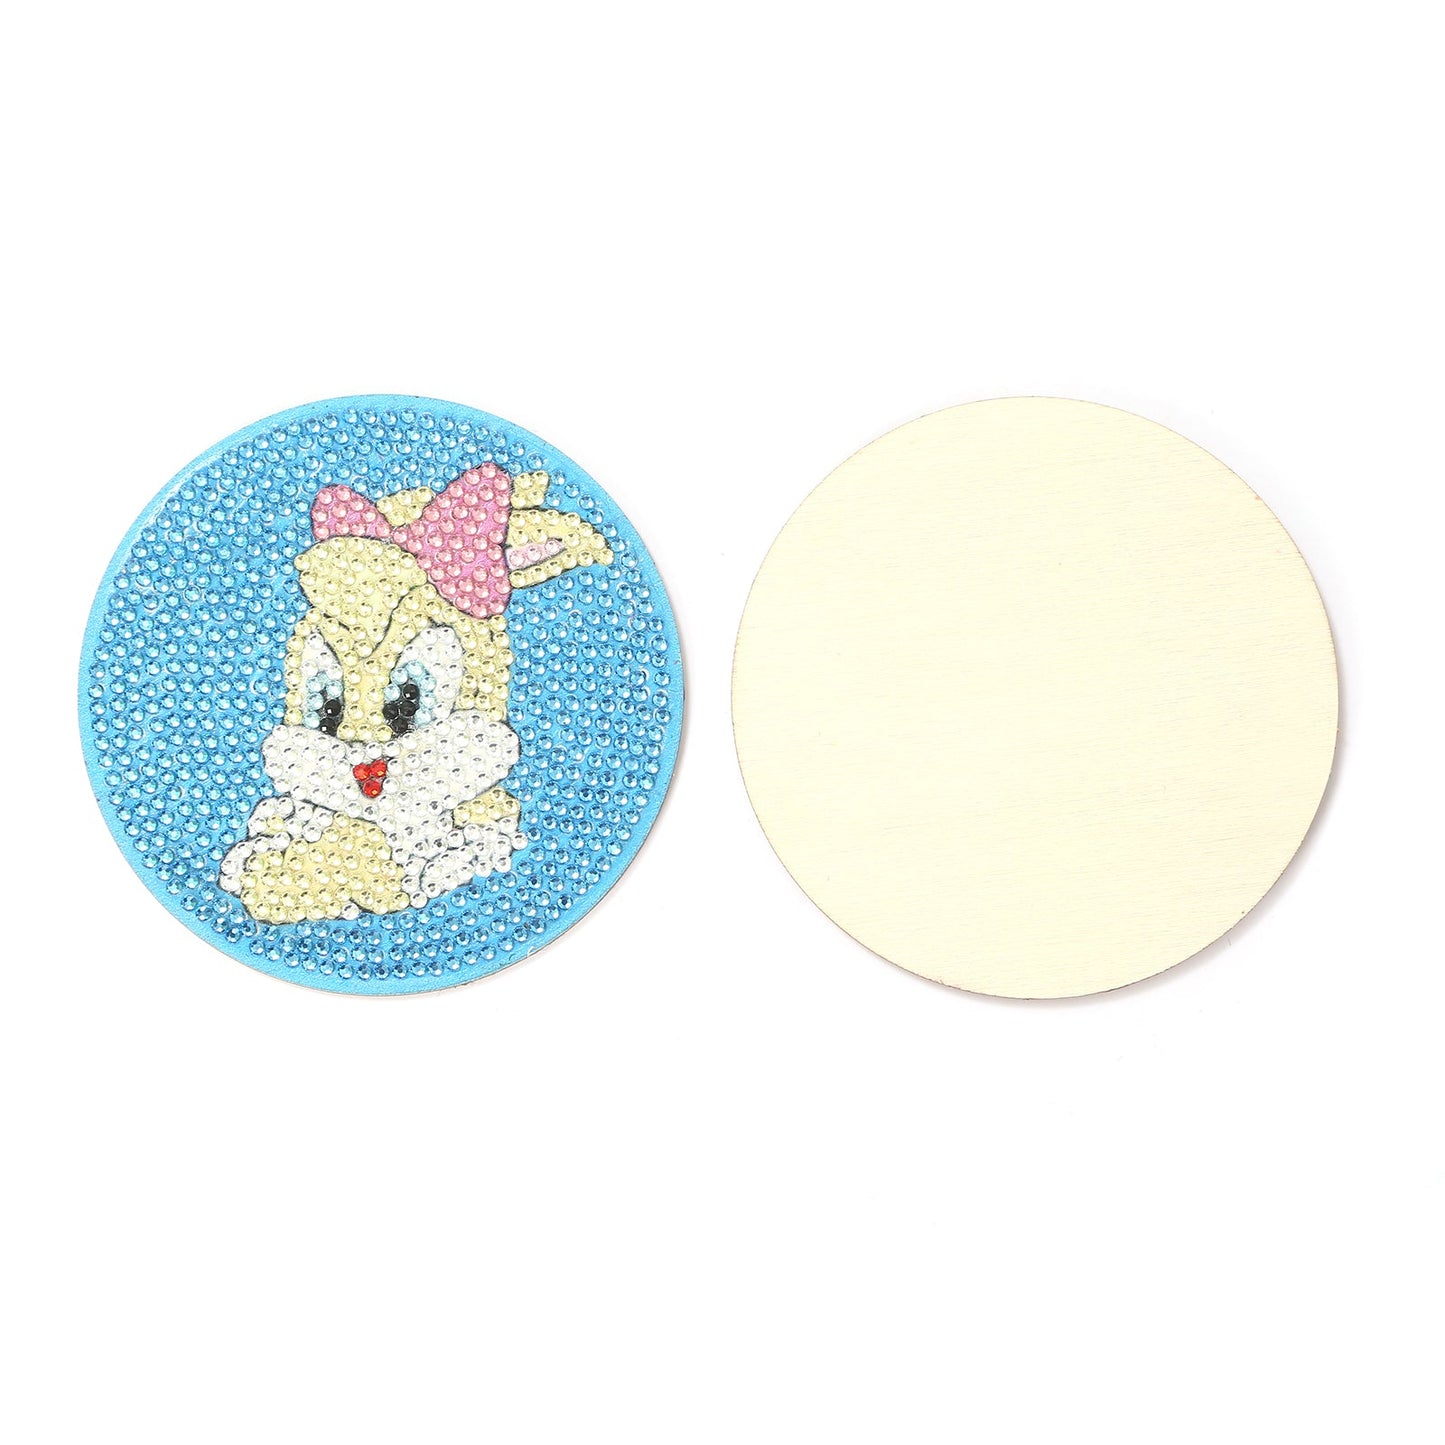 8 pcs set DIY Special Shaped Diamond Painting Coaster | Anime characters